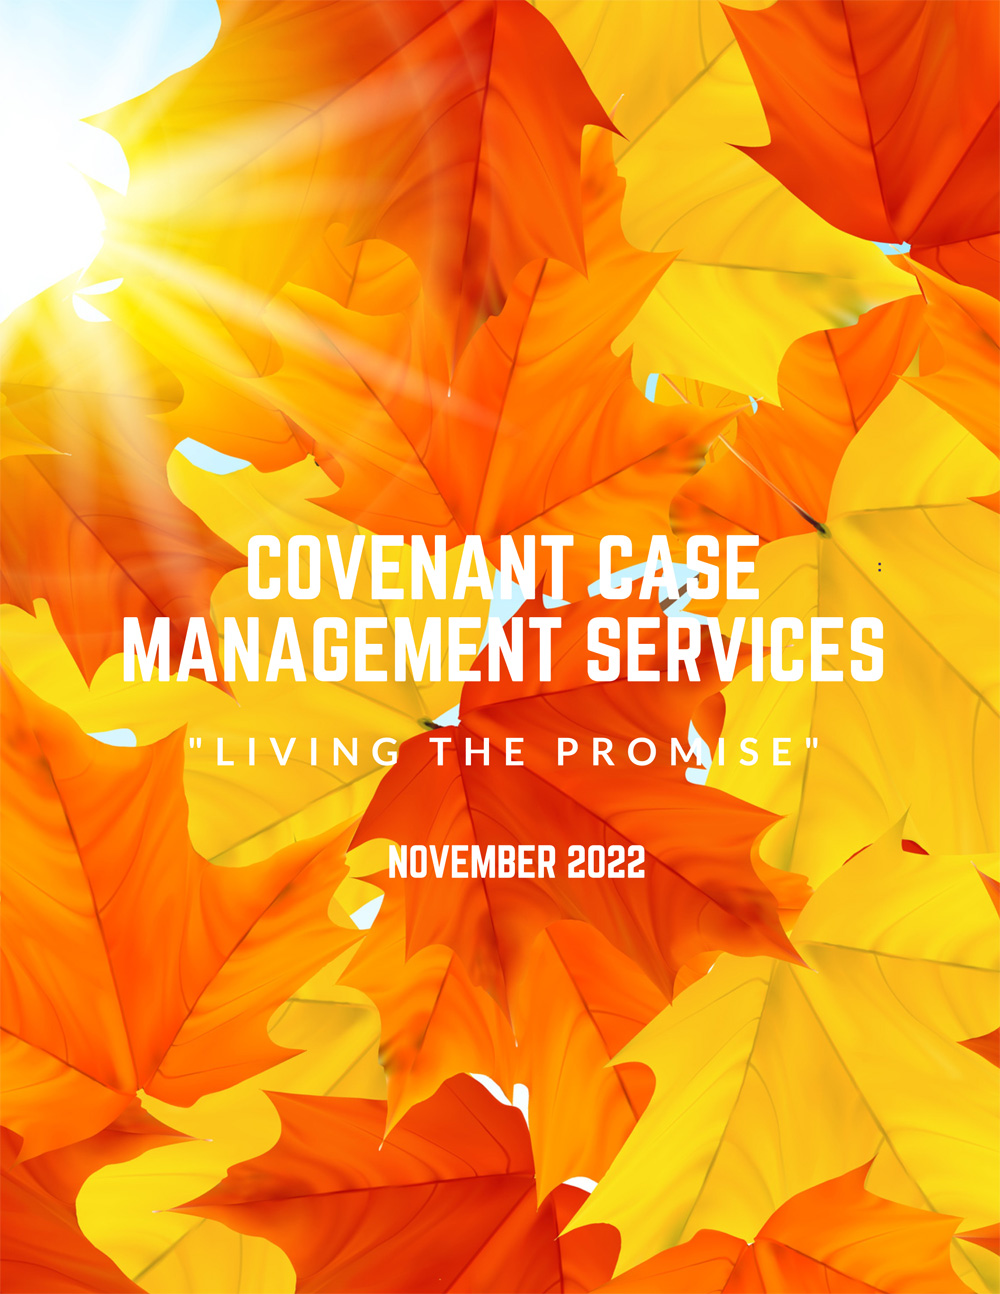 November 2022 Newsletter from Covenant Case Management Services